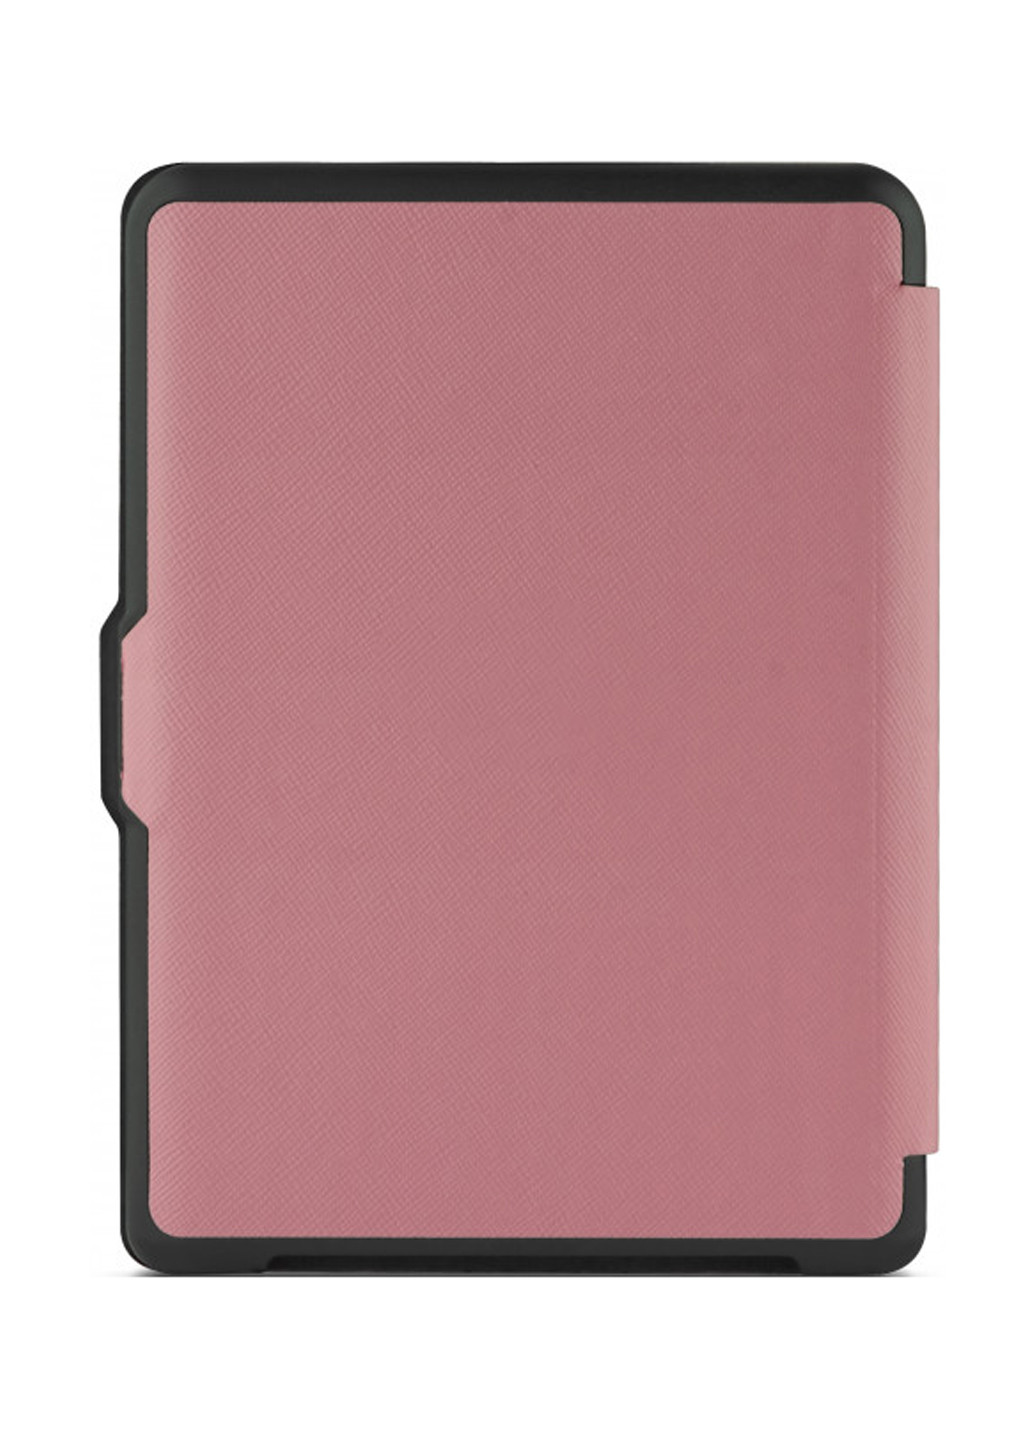 Чехол Premium для AIRBOOK City Base/LED pink (4821784622011) Airon premium для электронной книги airbook city base/led pink (4821784622011) (158554721)